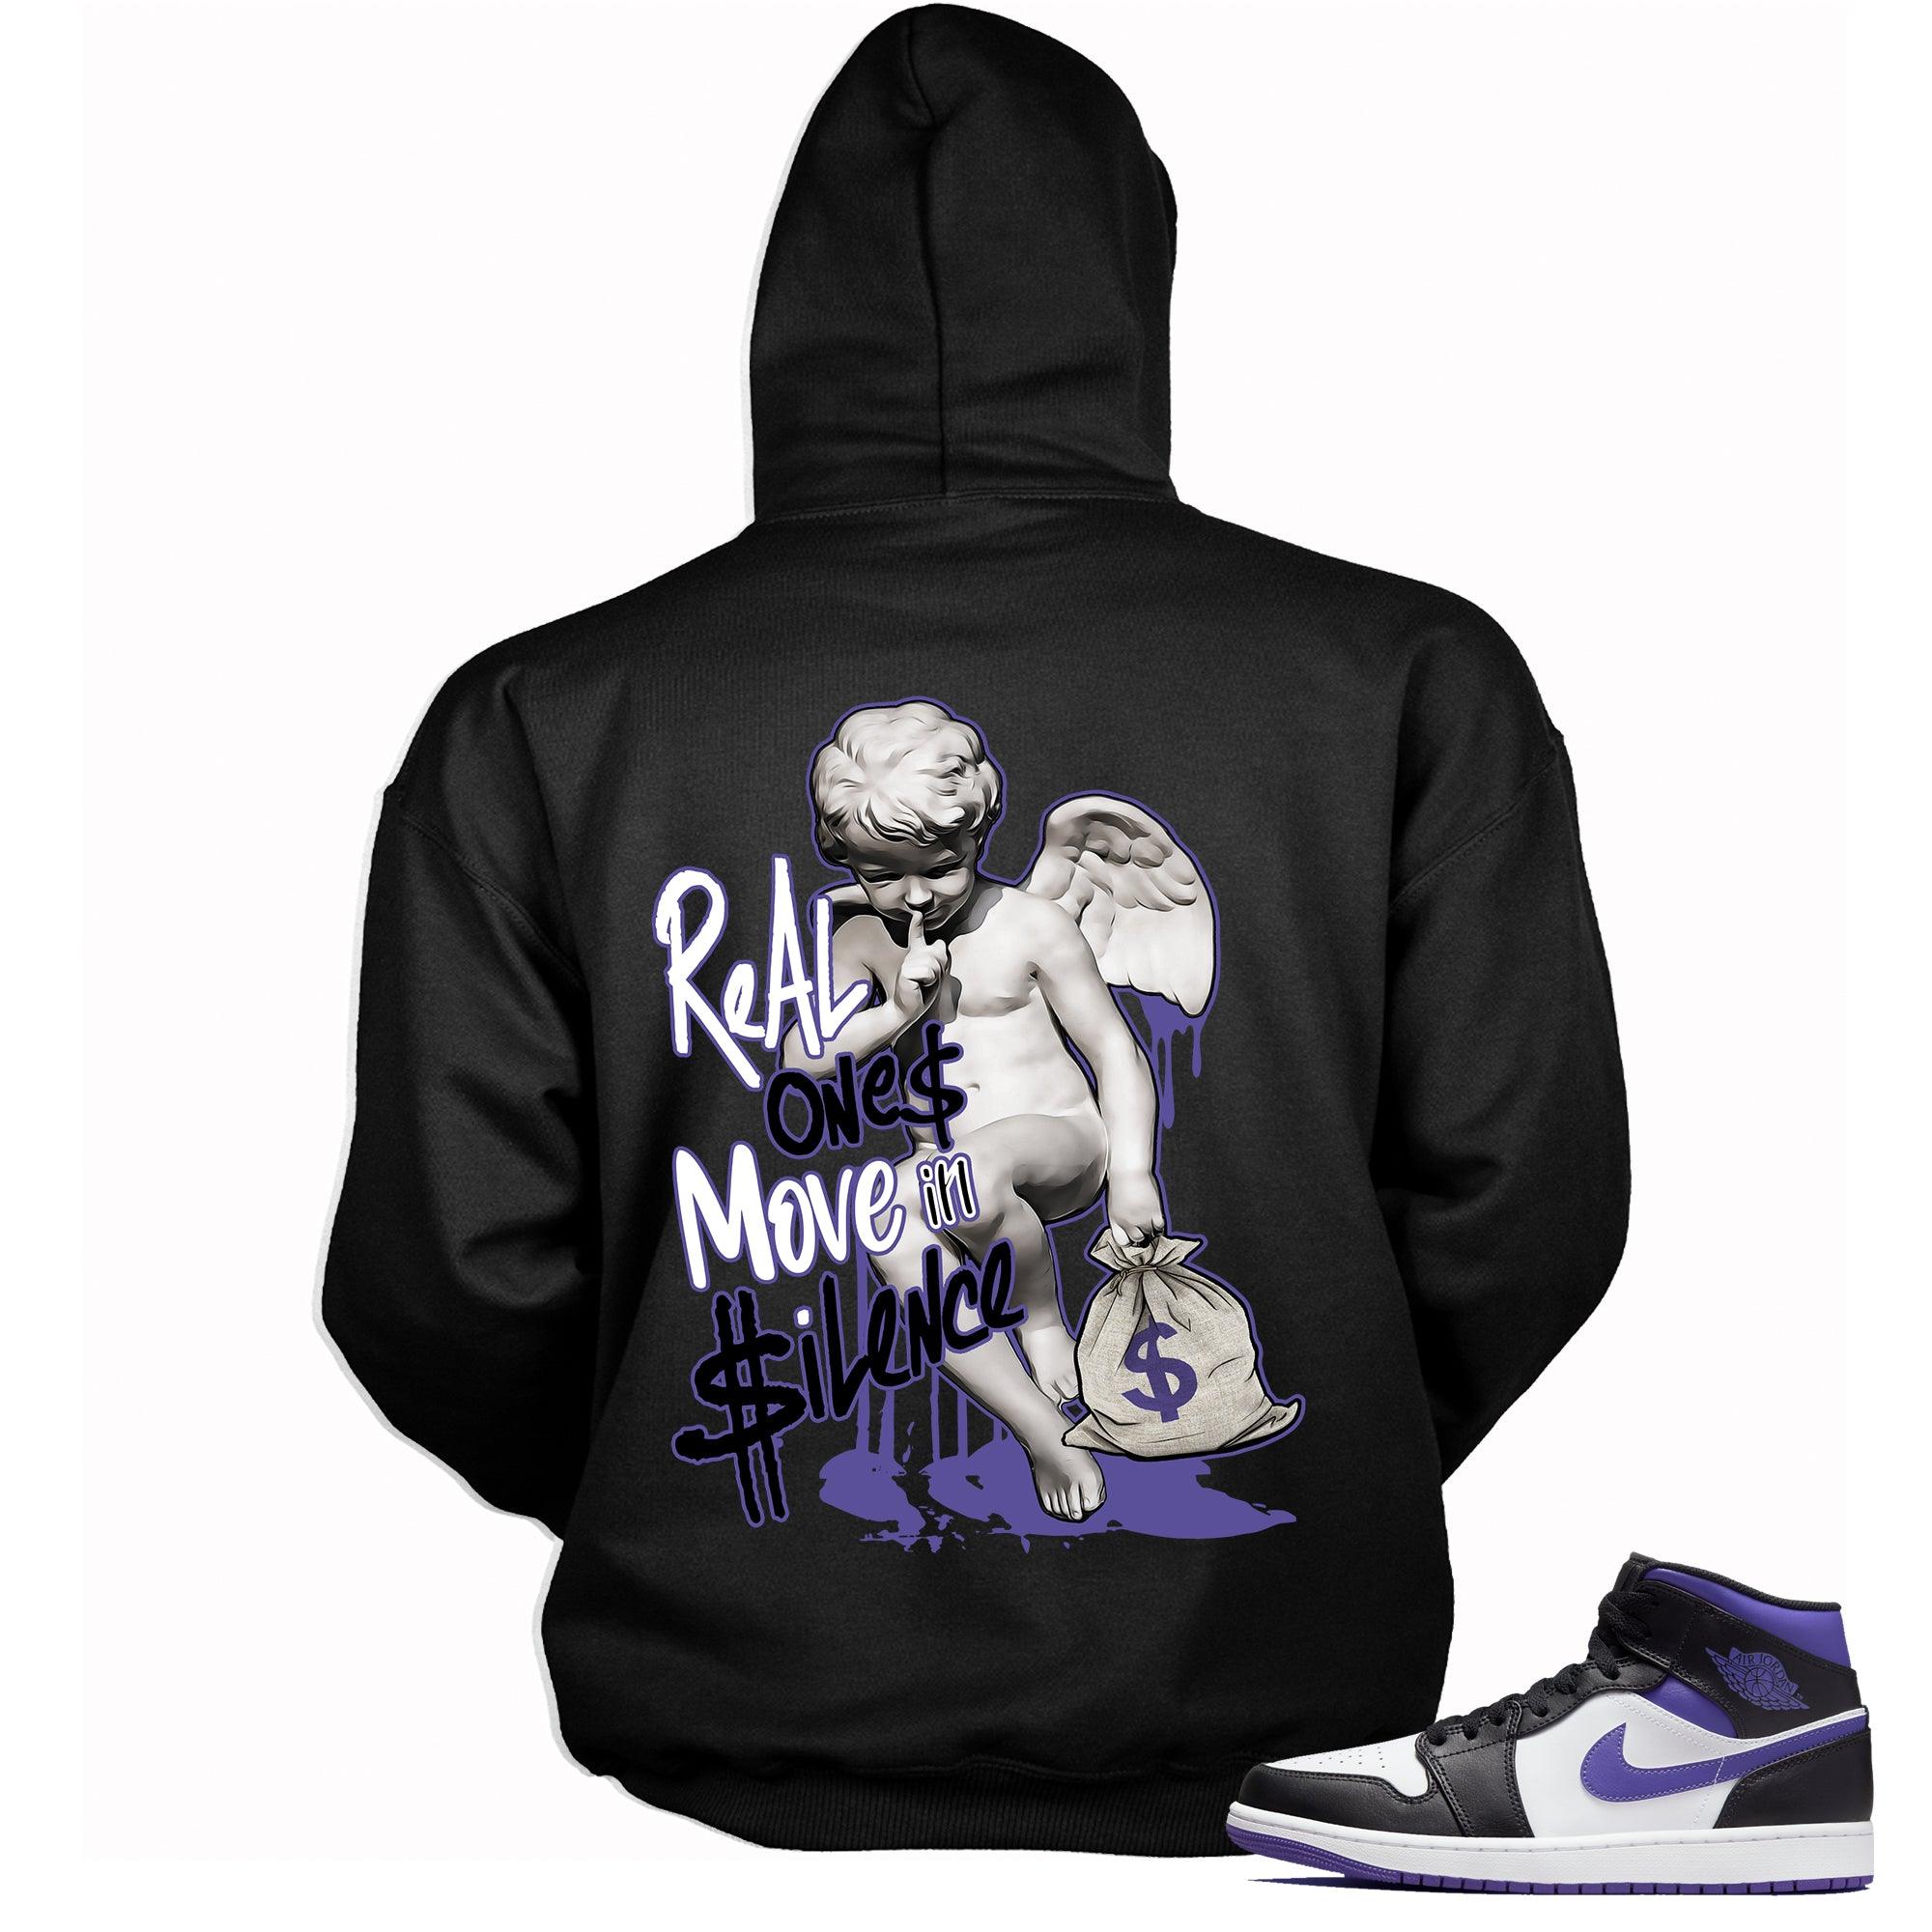 Real Ones Move in Silence Hoodie Jordan 1s Mid White Black Purple photo